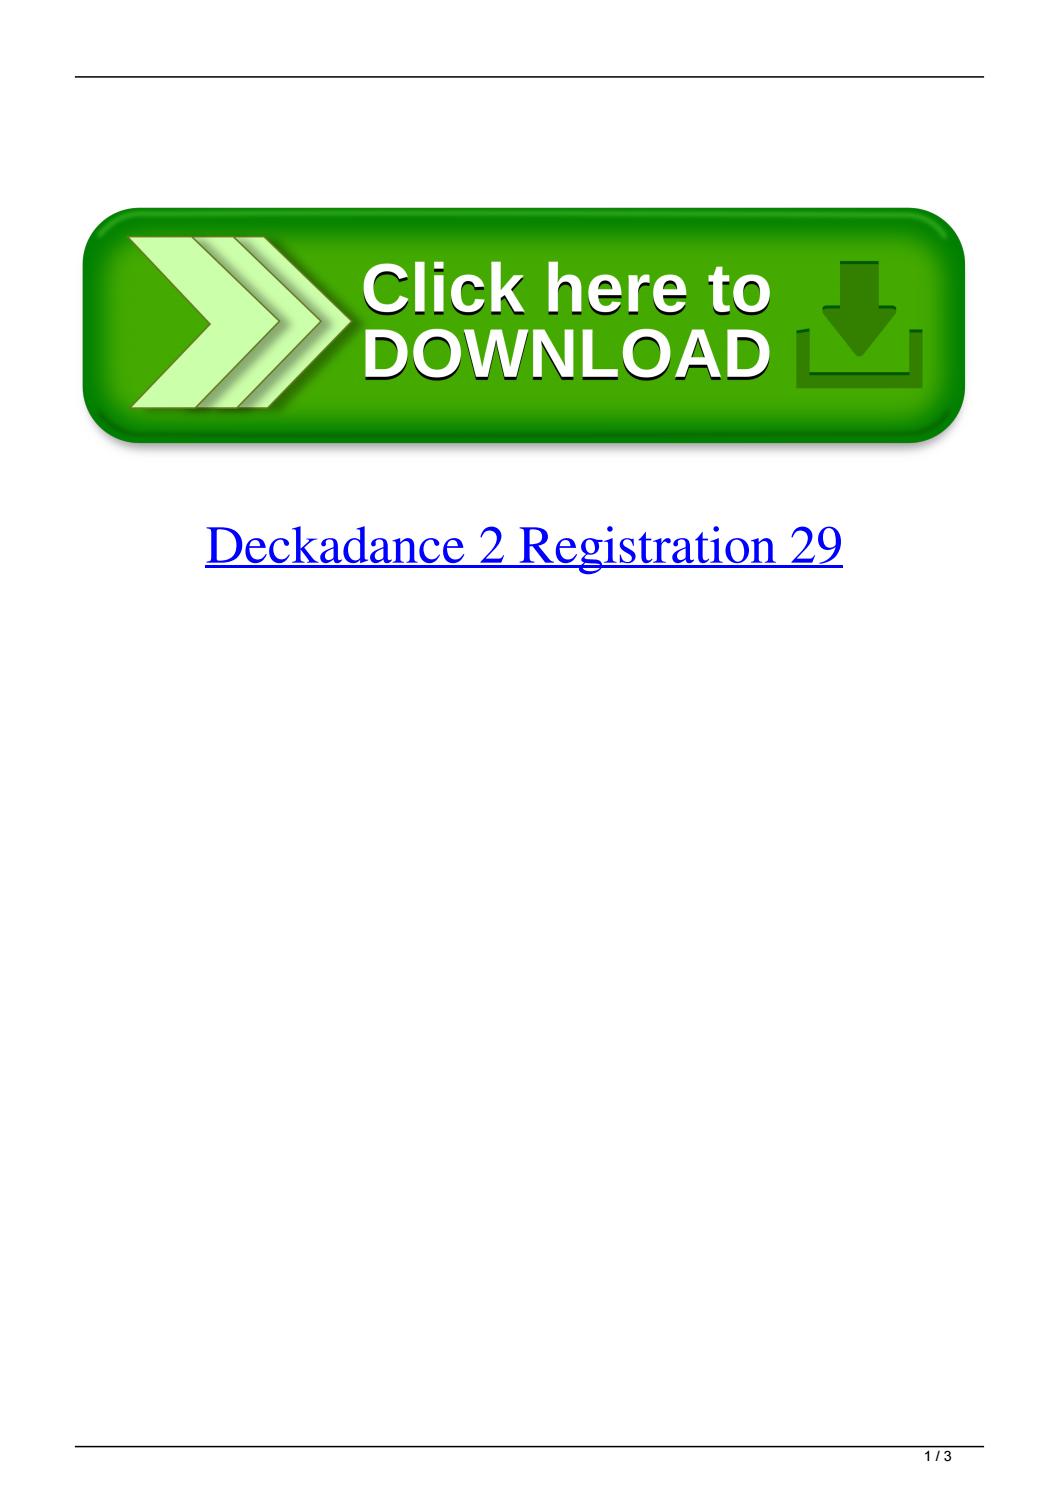 Registration File For Deckadance